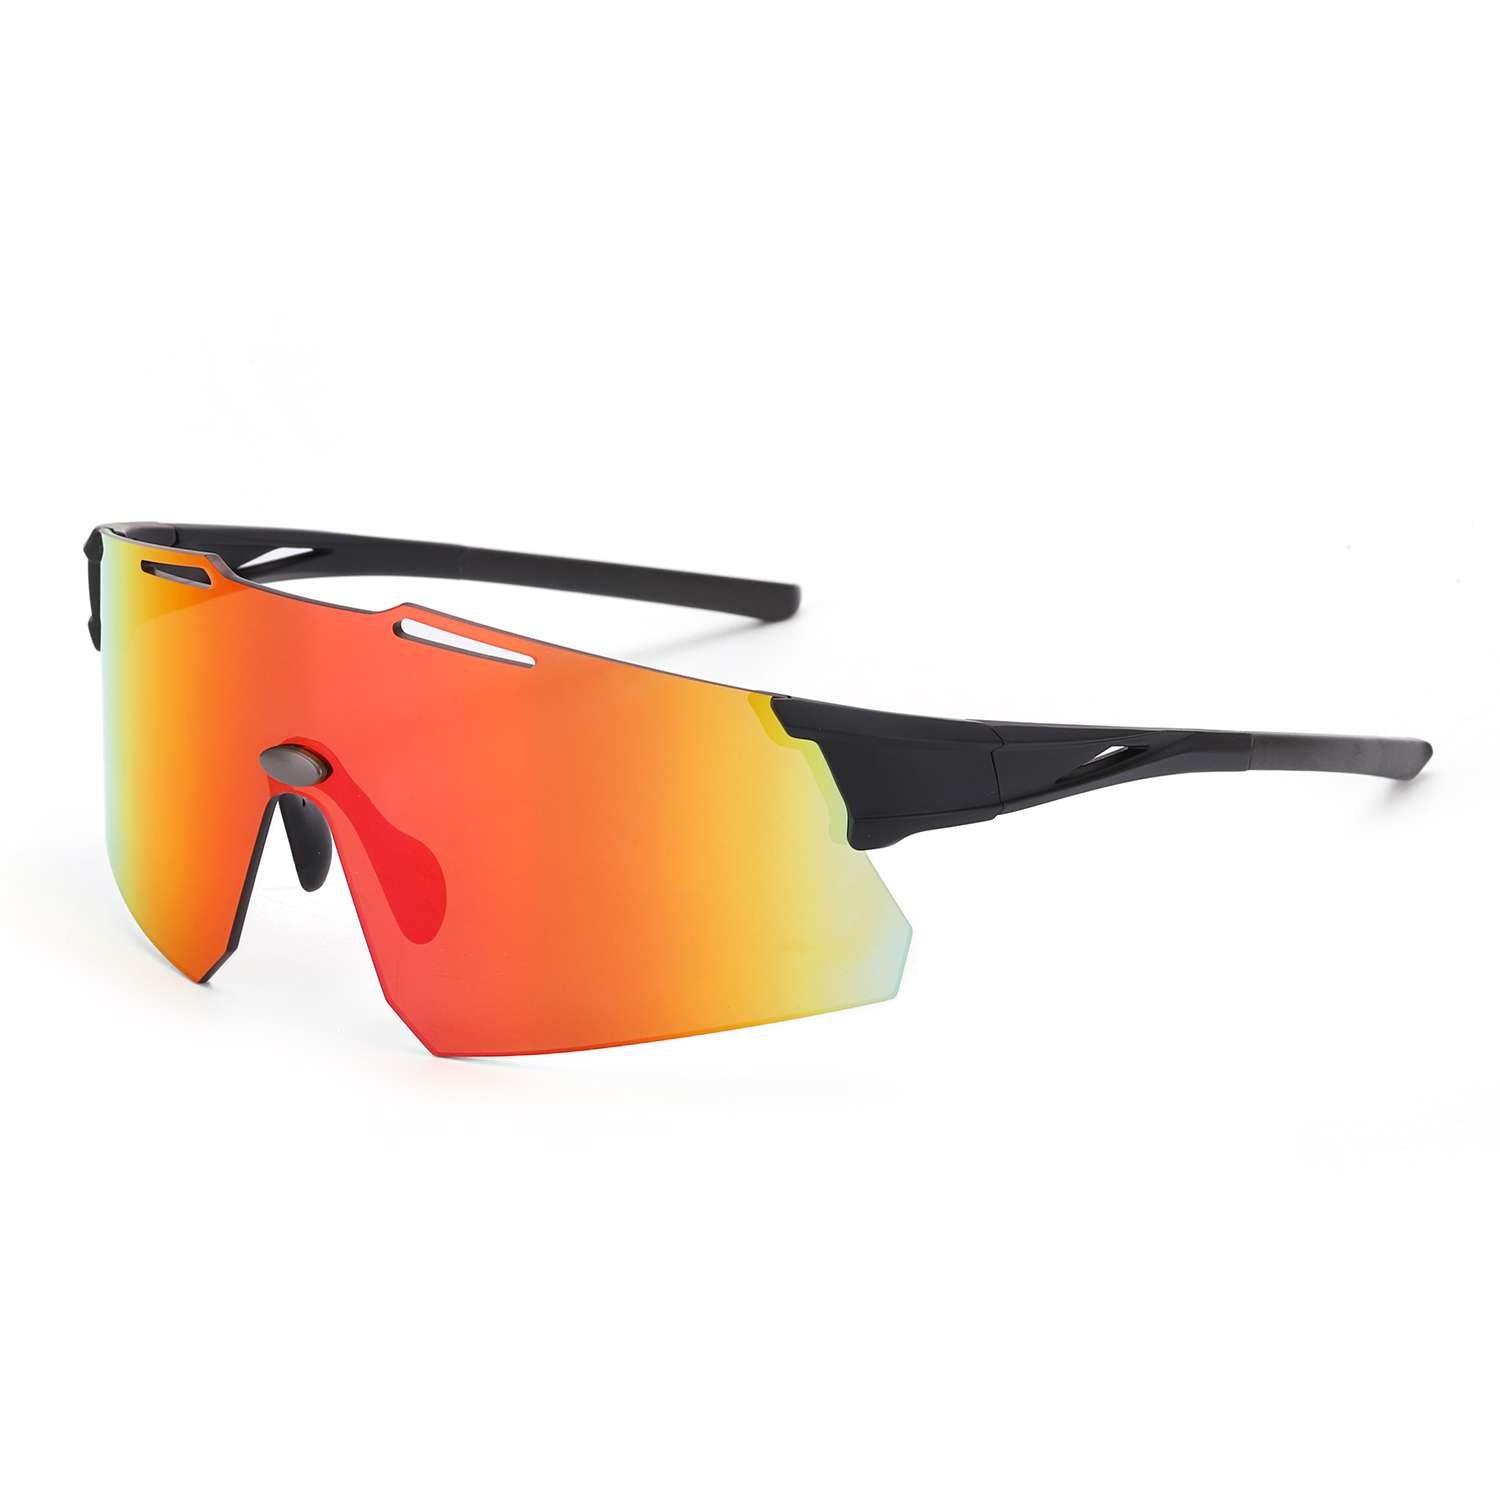 LVIOE P-Viper Oversized Modern Design Sports Sunglasses for Unisex, Orange